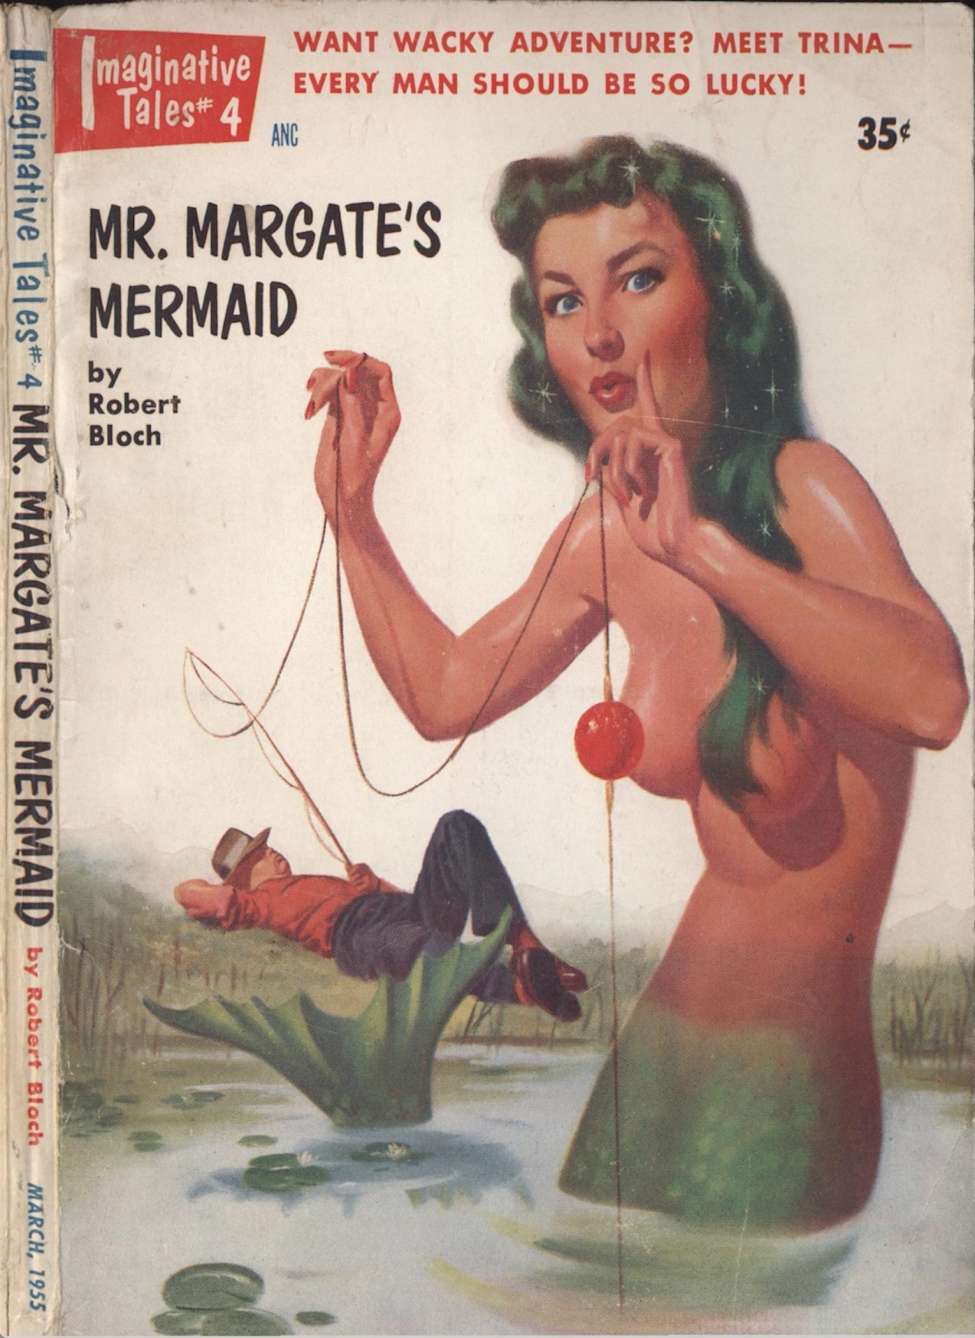 Comic Book Cover For Imaginative Tales v1 4 - Mr. Margate's Mermaid - Robert Bloch